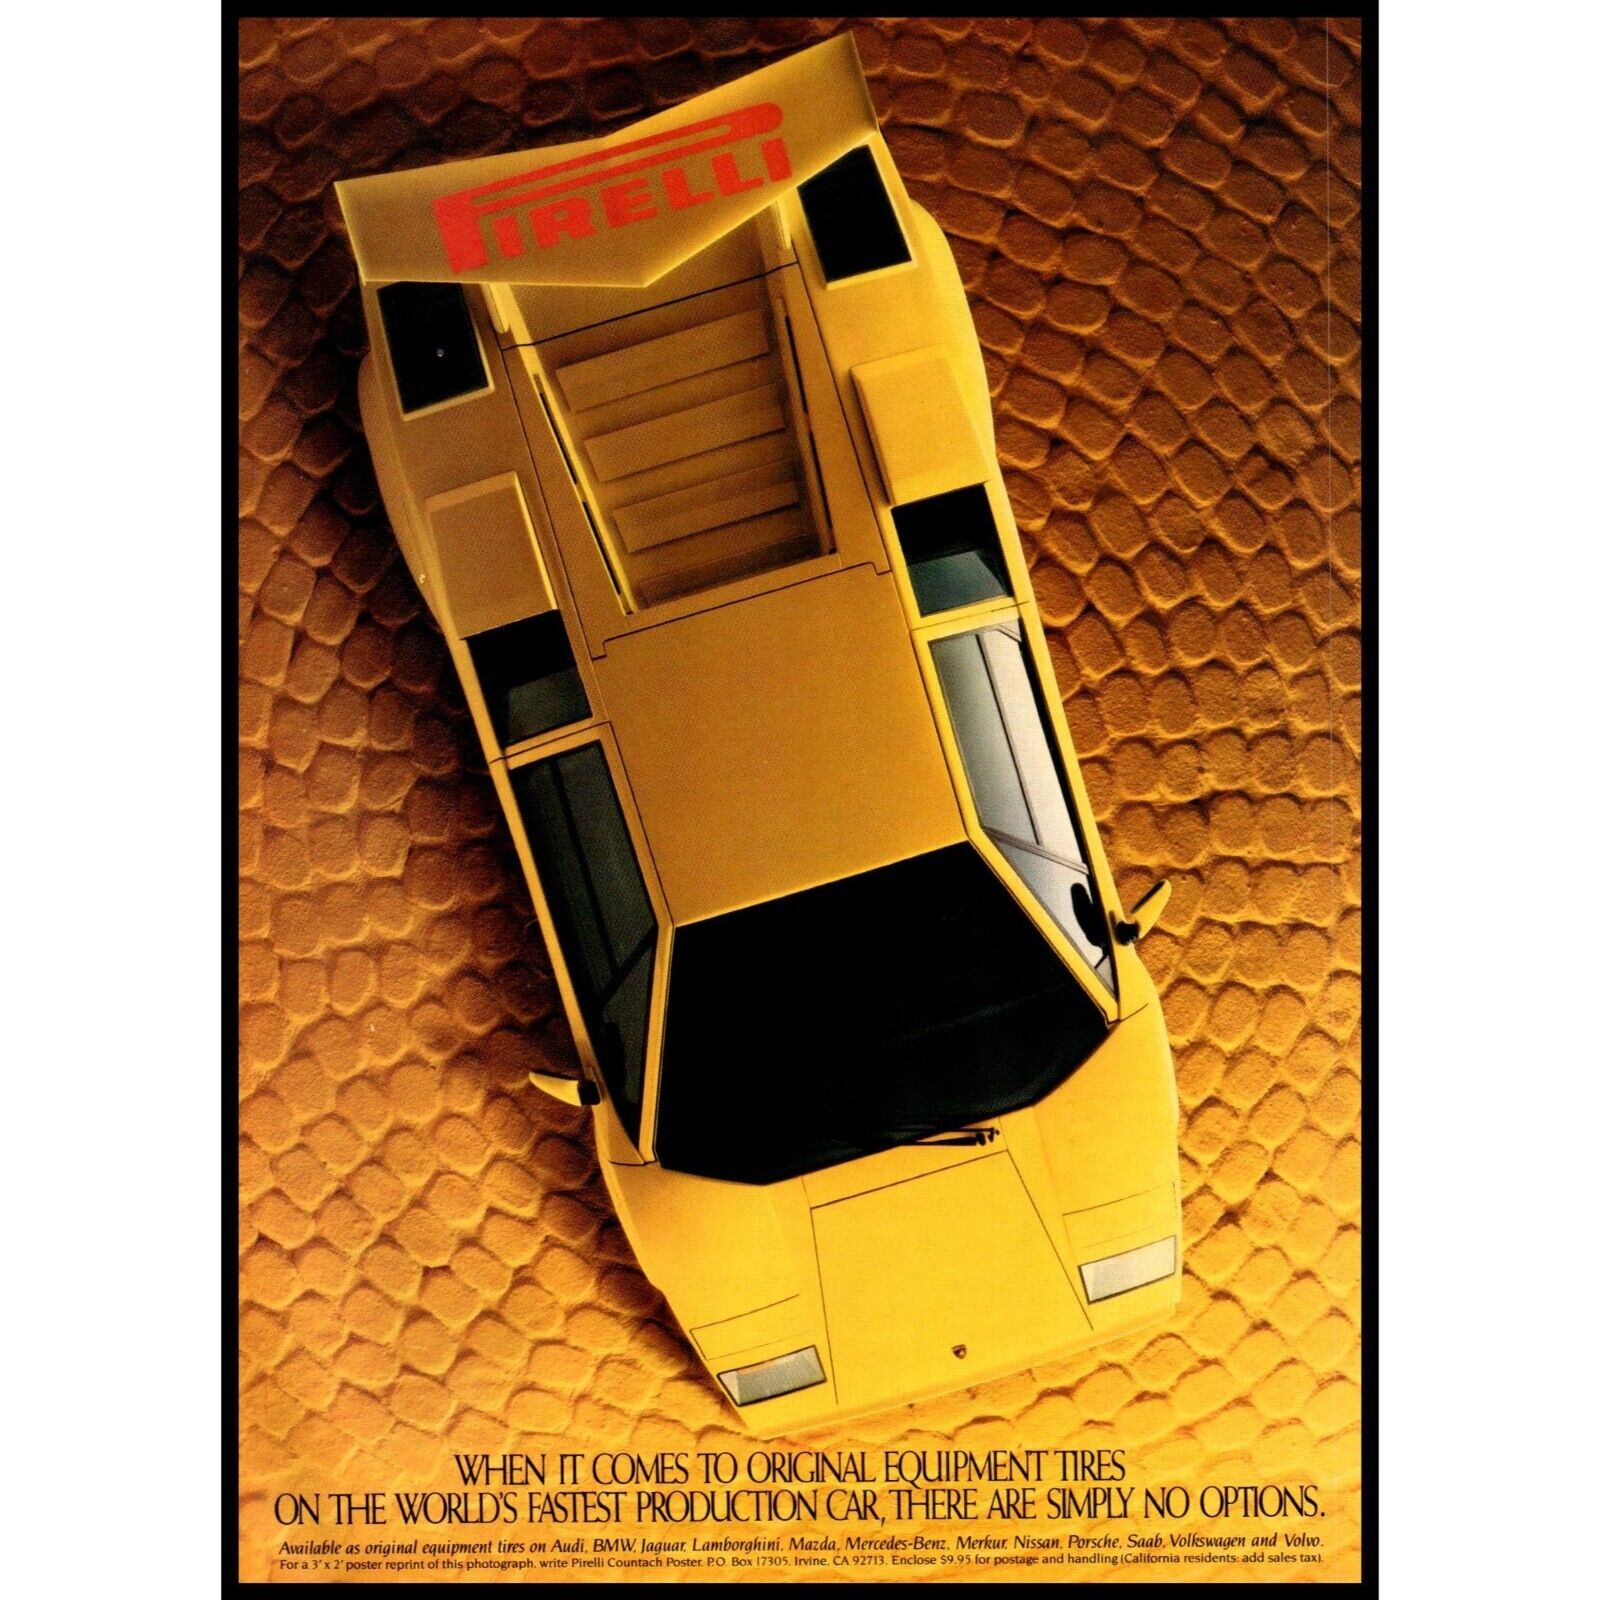 1989 Pirelli Tires Yellow Lamborghini Countach Vintage Print Ad Italian Wall Art